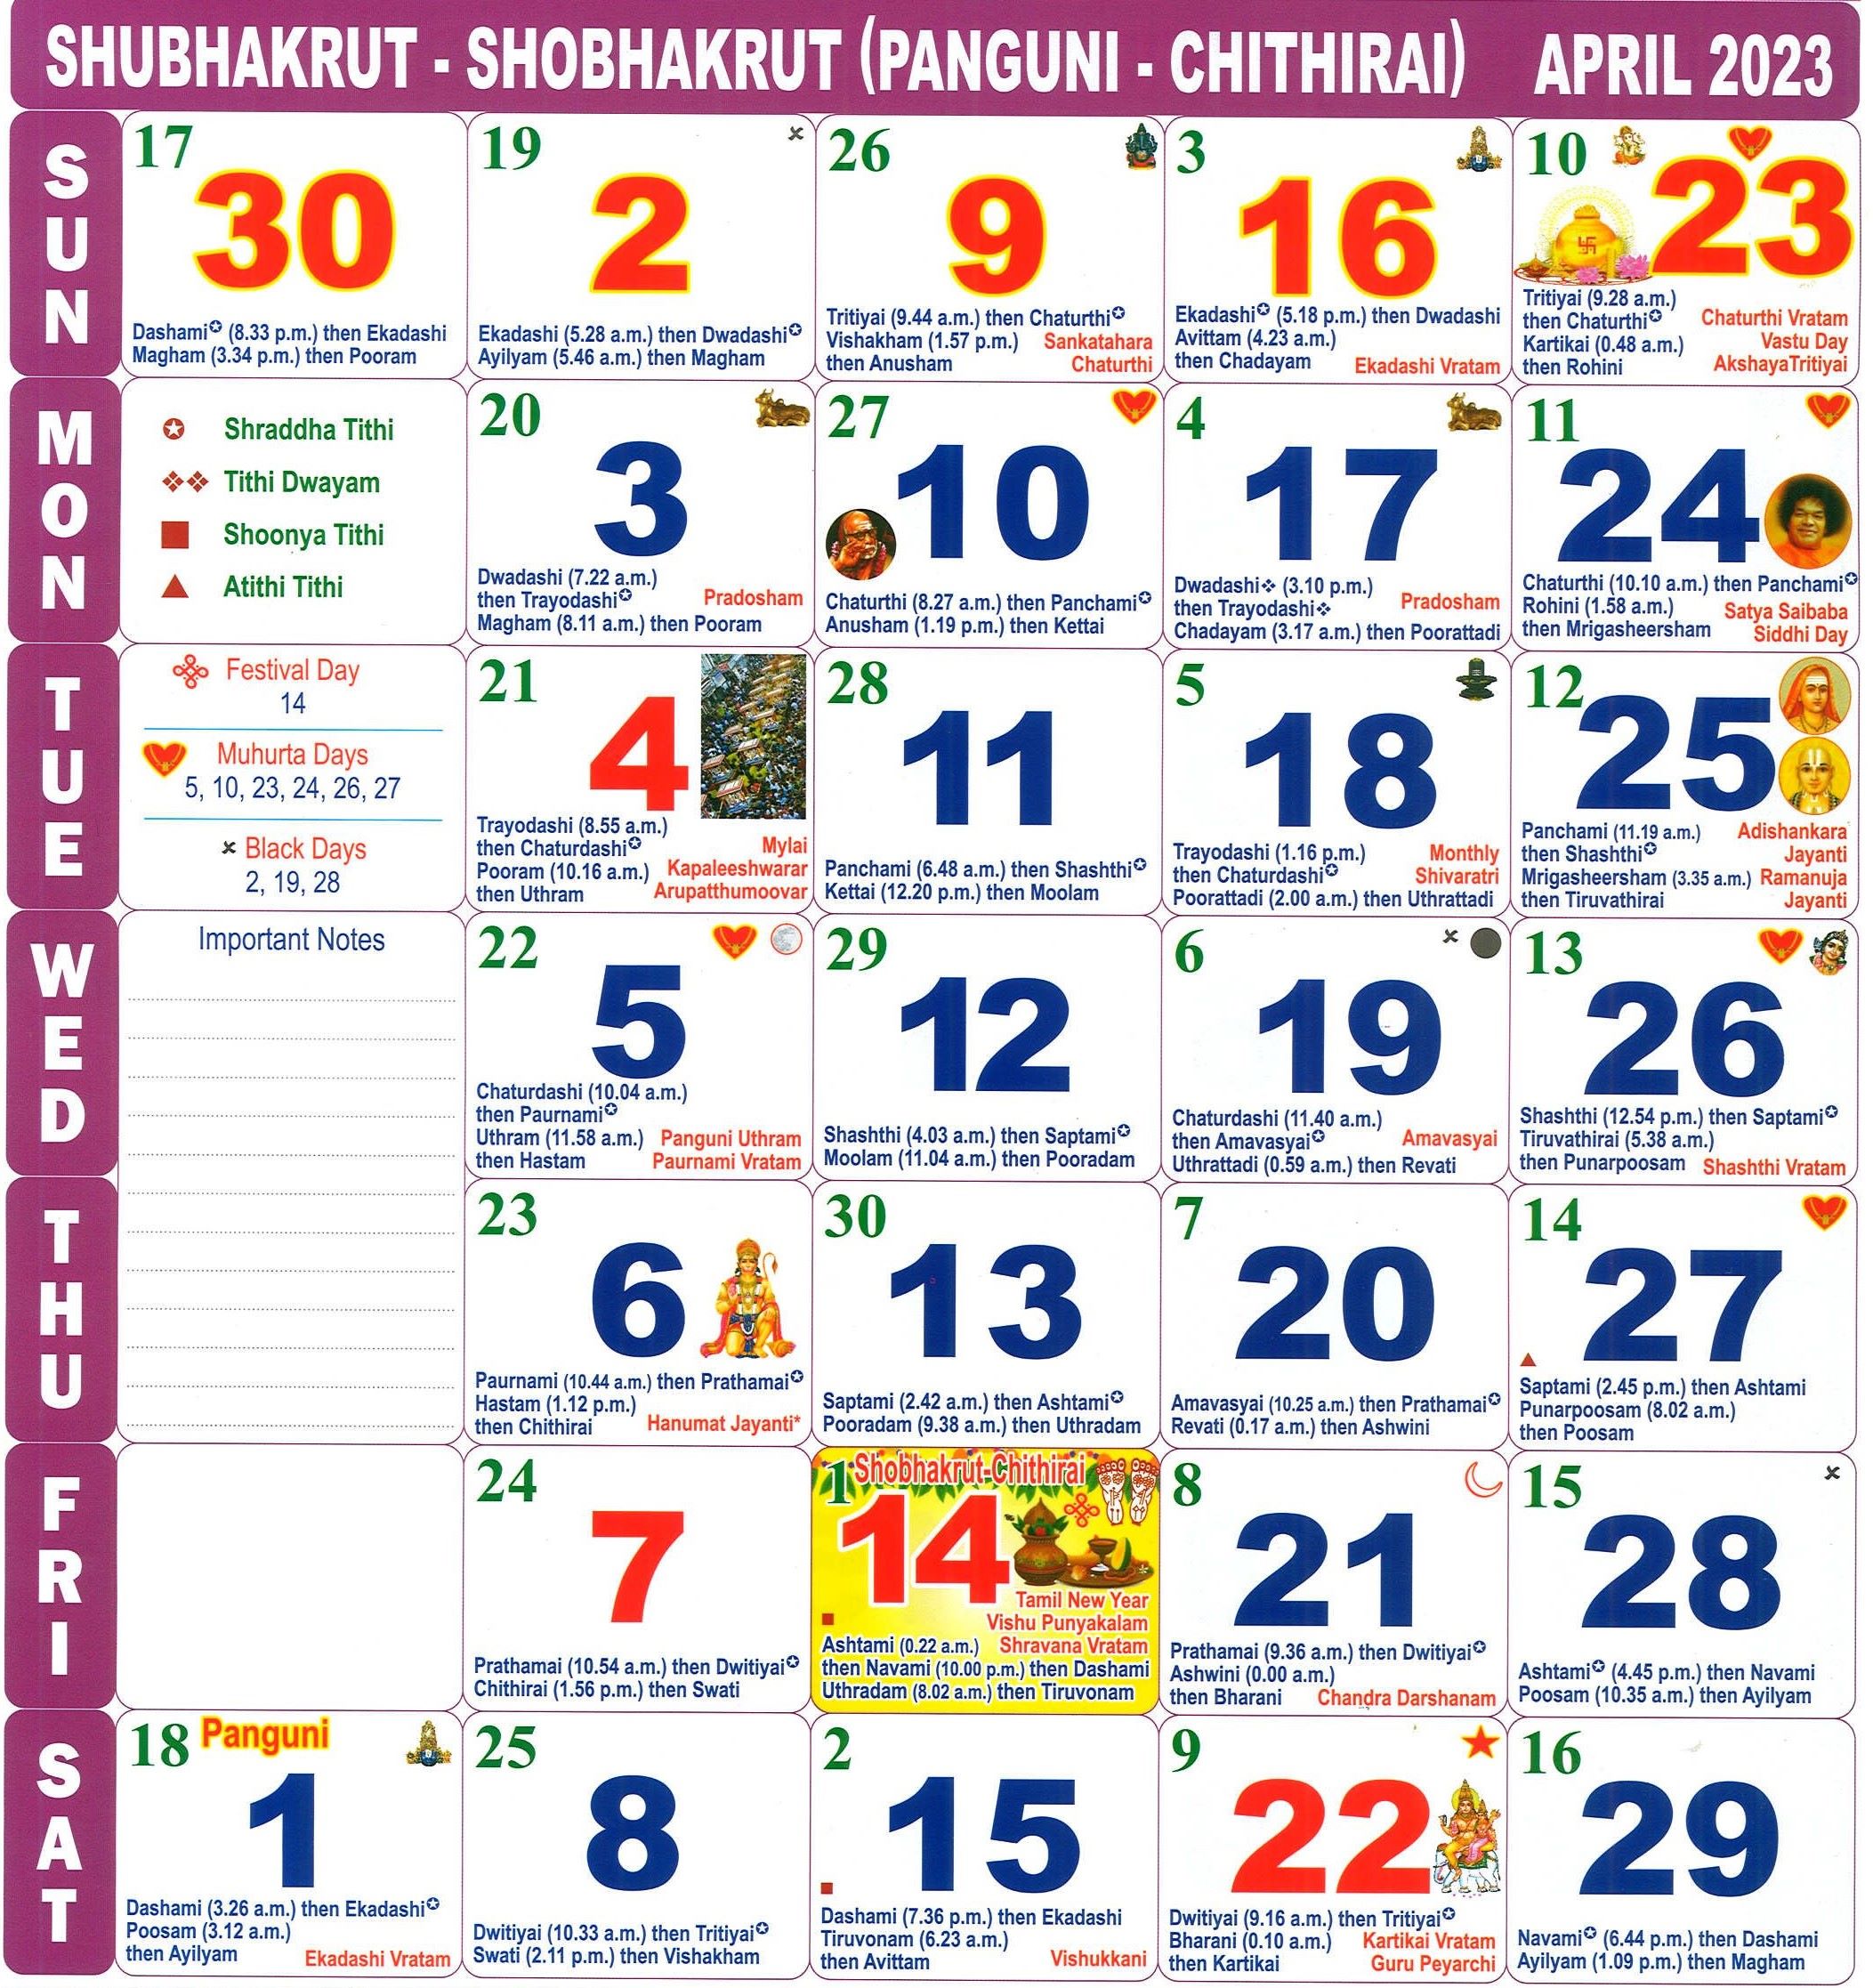 Календарь на апрель 2024 таблица